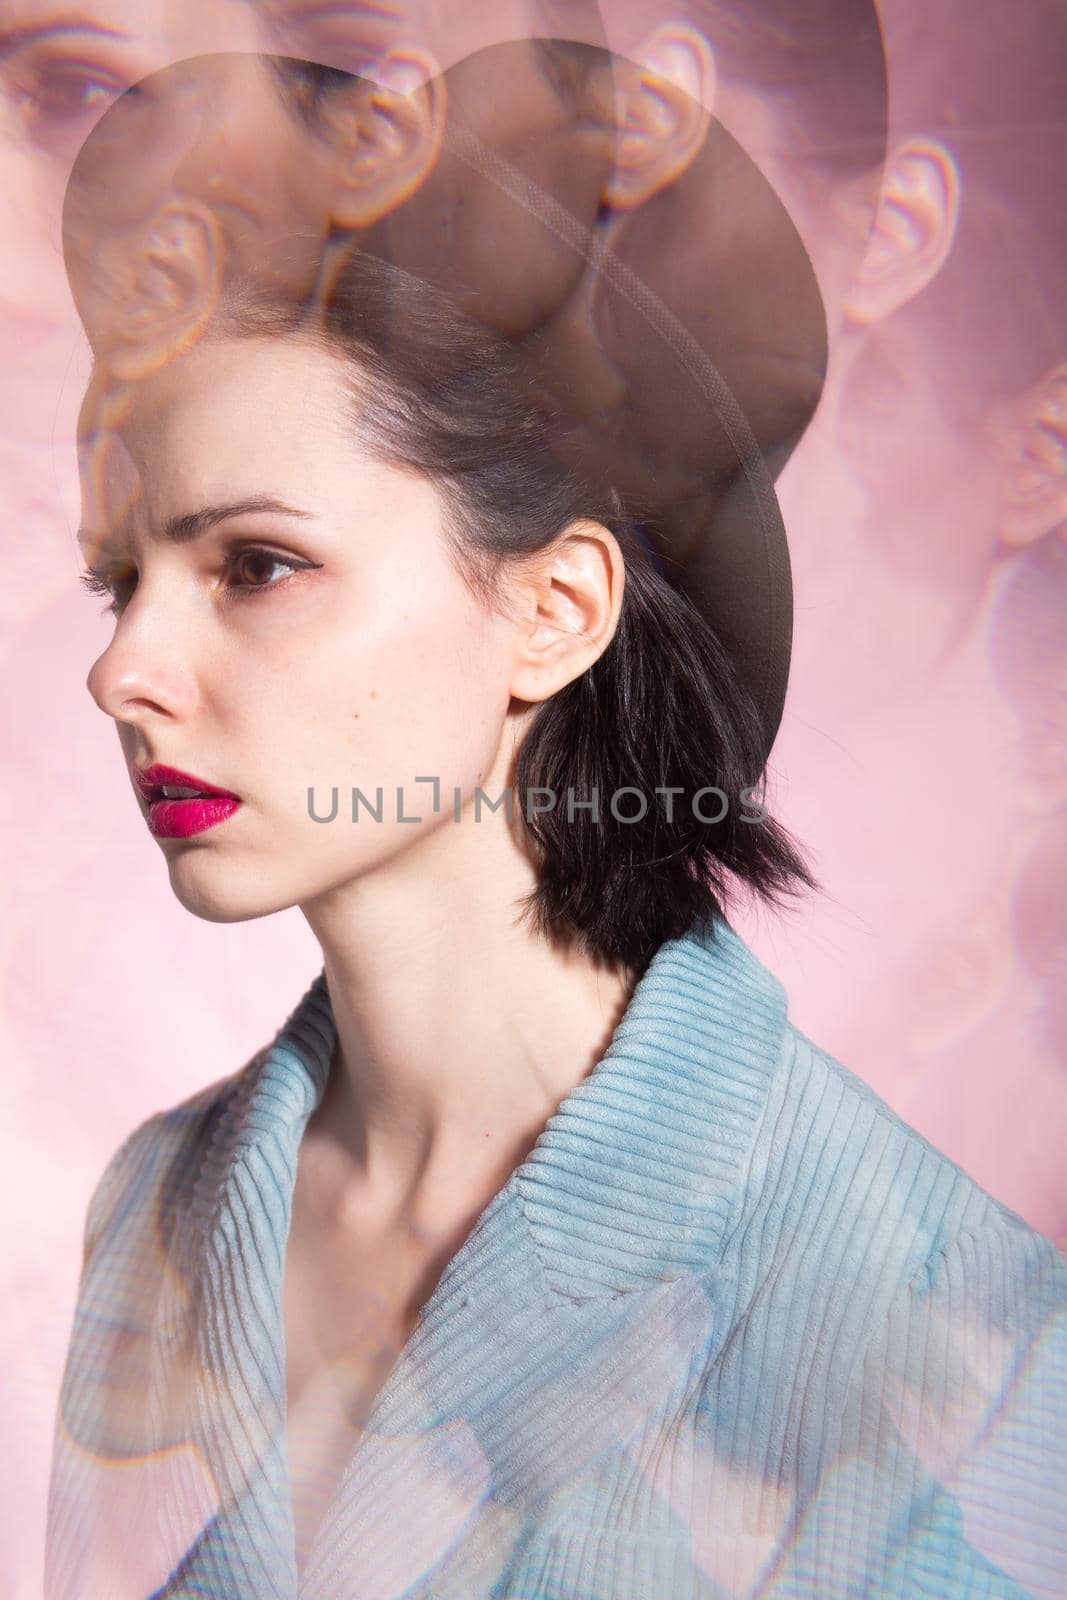 art portrait, woman with pink lipstick in black hat and corduroy jacket by shilovskaya